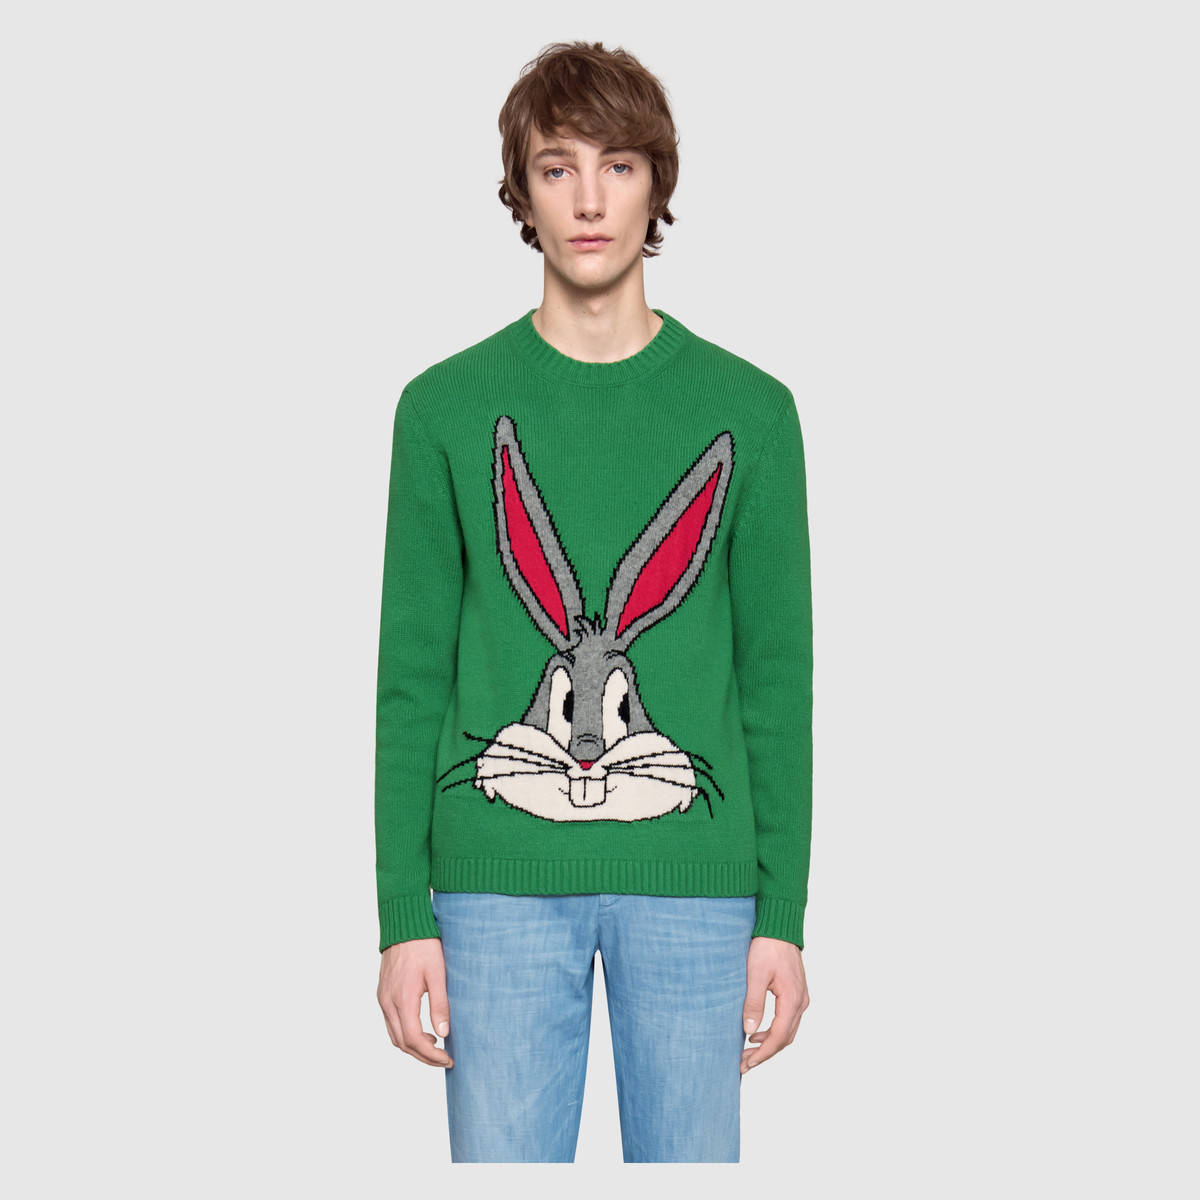 bugs bunny sweater gucci